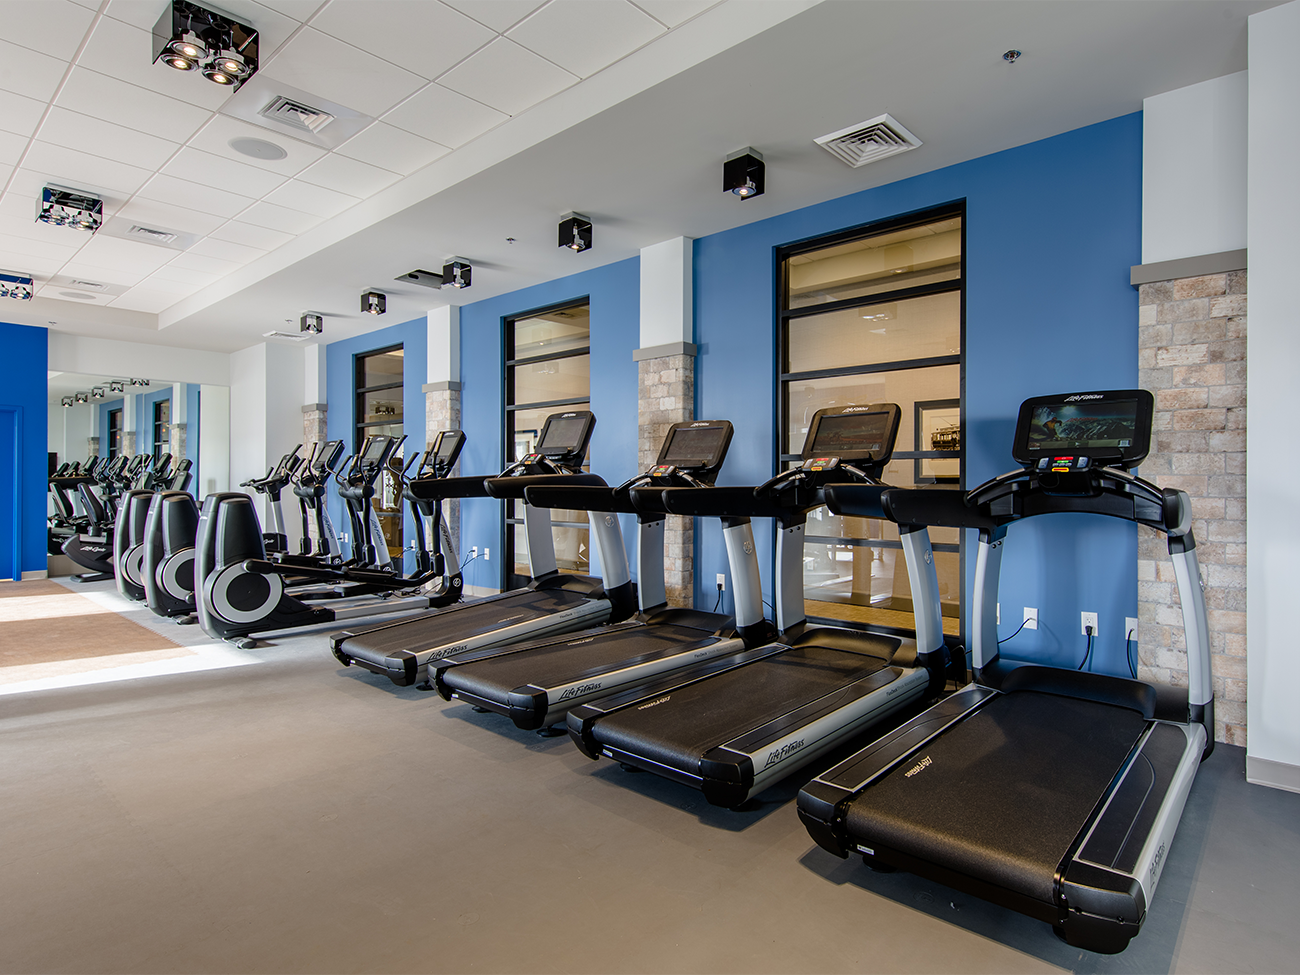 MOVE | Fitness Center - Cardio Equipment